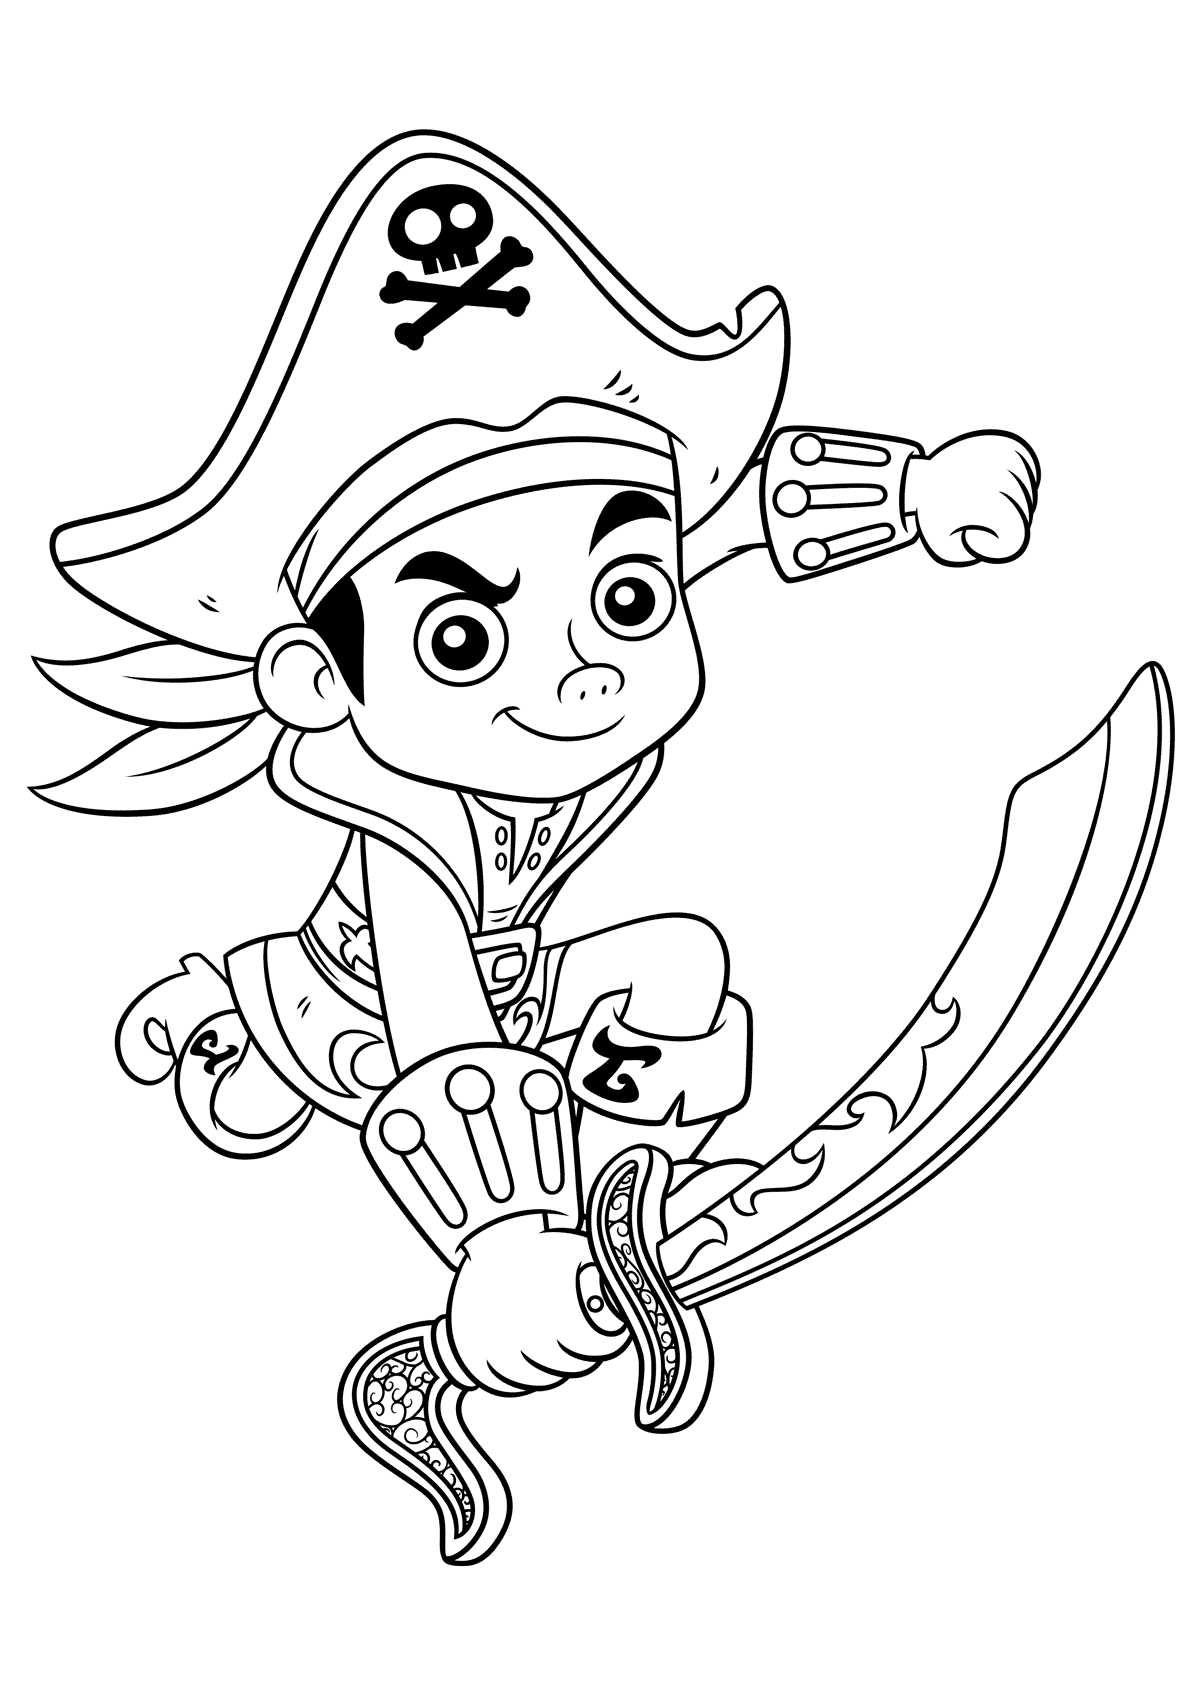 Раскраска с Джейком - предводителем пиратов Нетландии